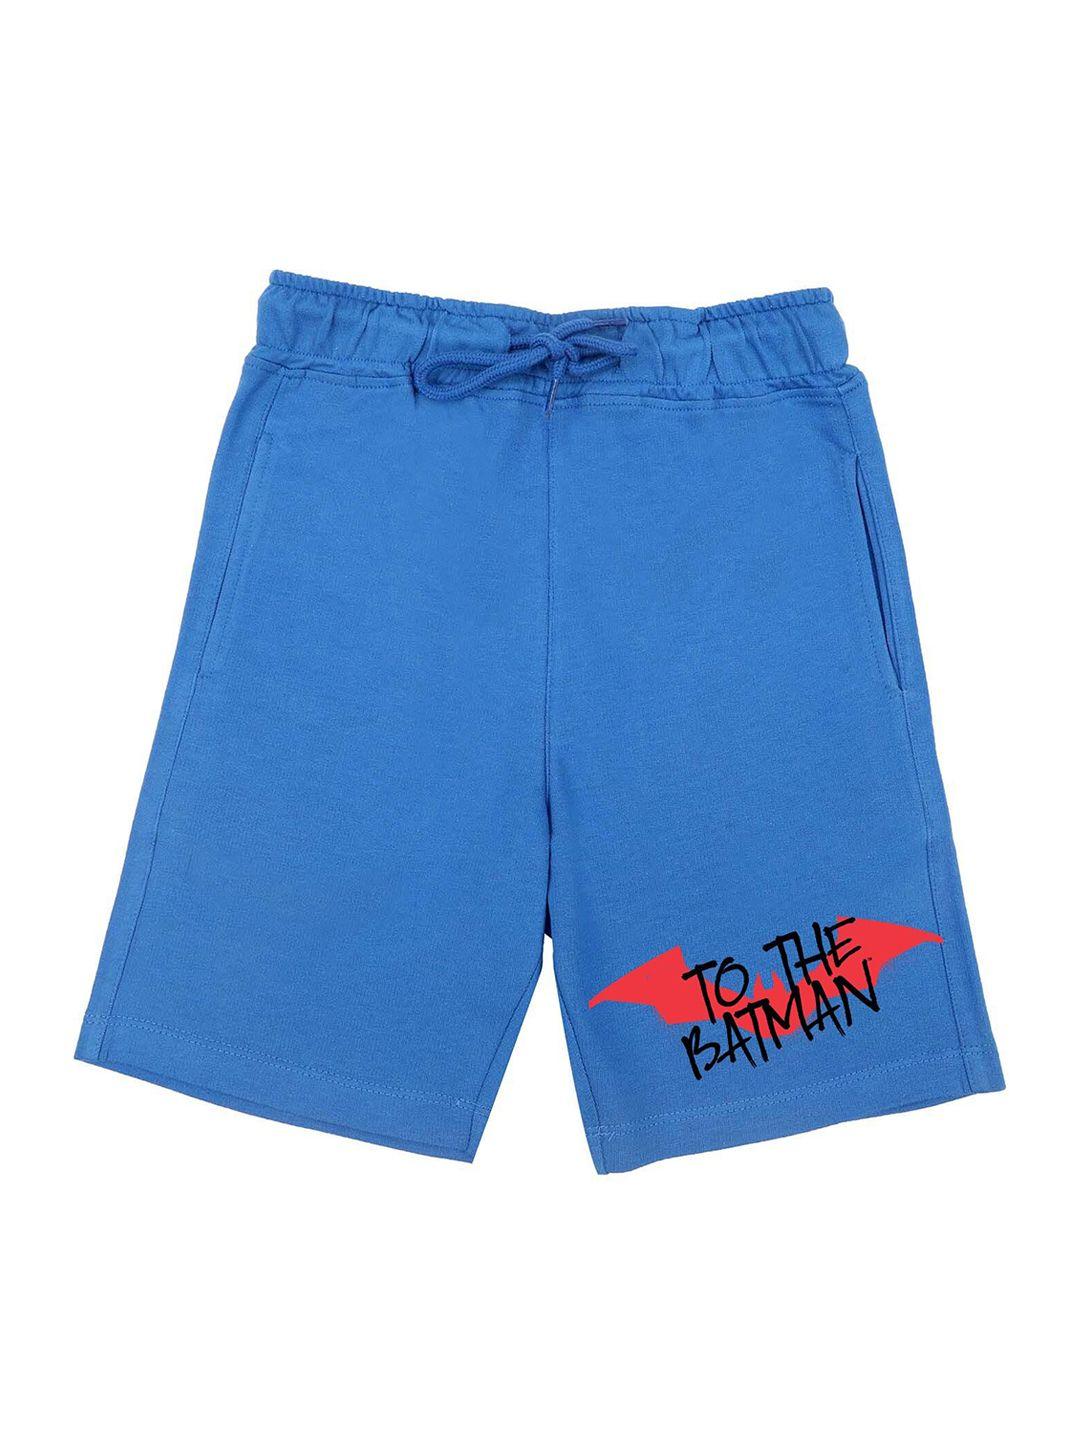 dc by wear your mind boys blue regular fit superhero printed batman cotton shorts